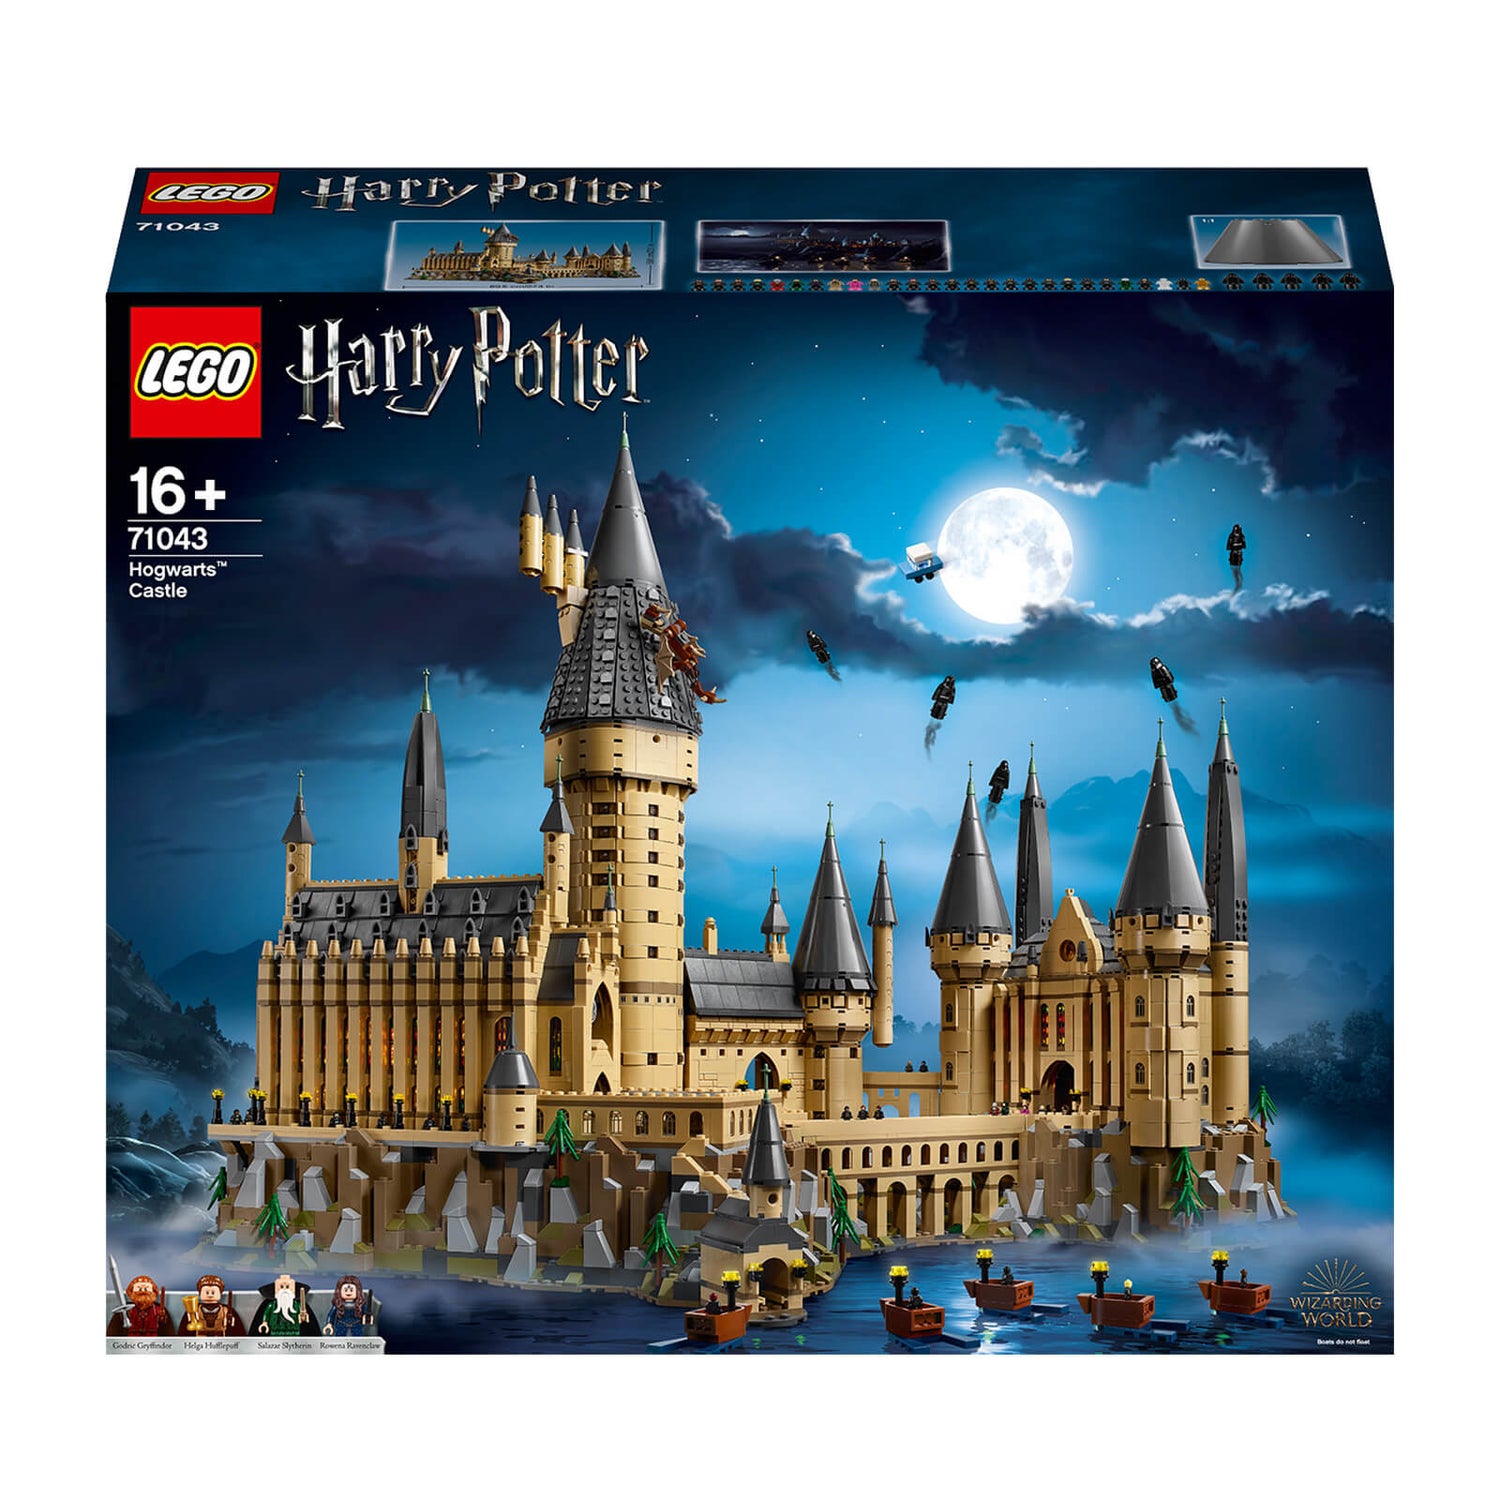 6020 Pieces Brand New LEGO Harry Potter Hogwarts Castle 71043 Building Kit